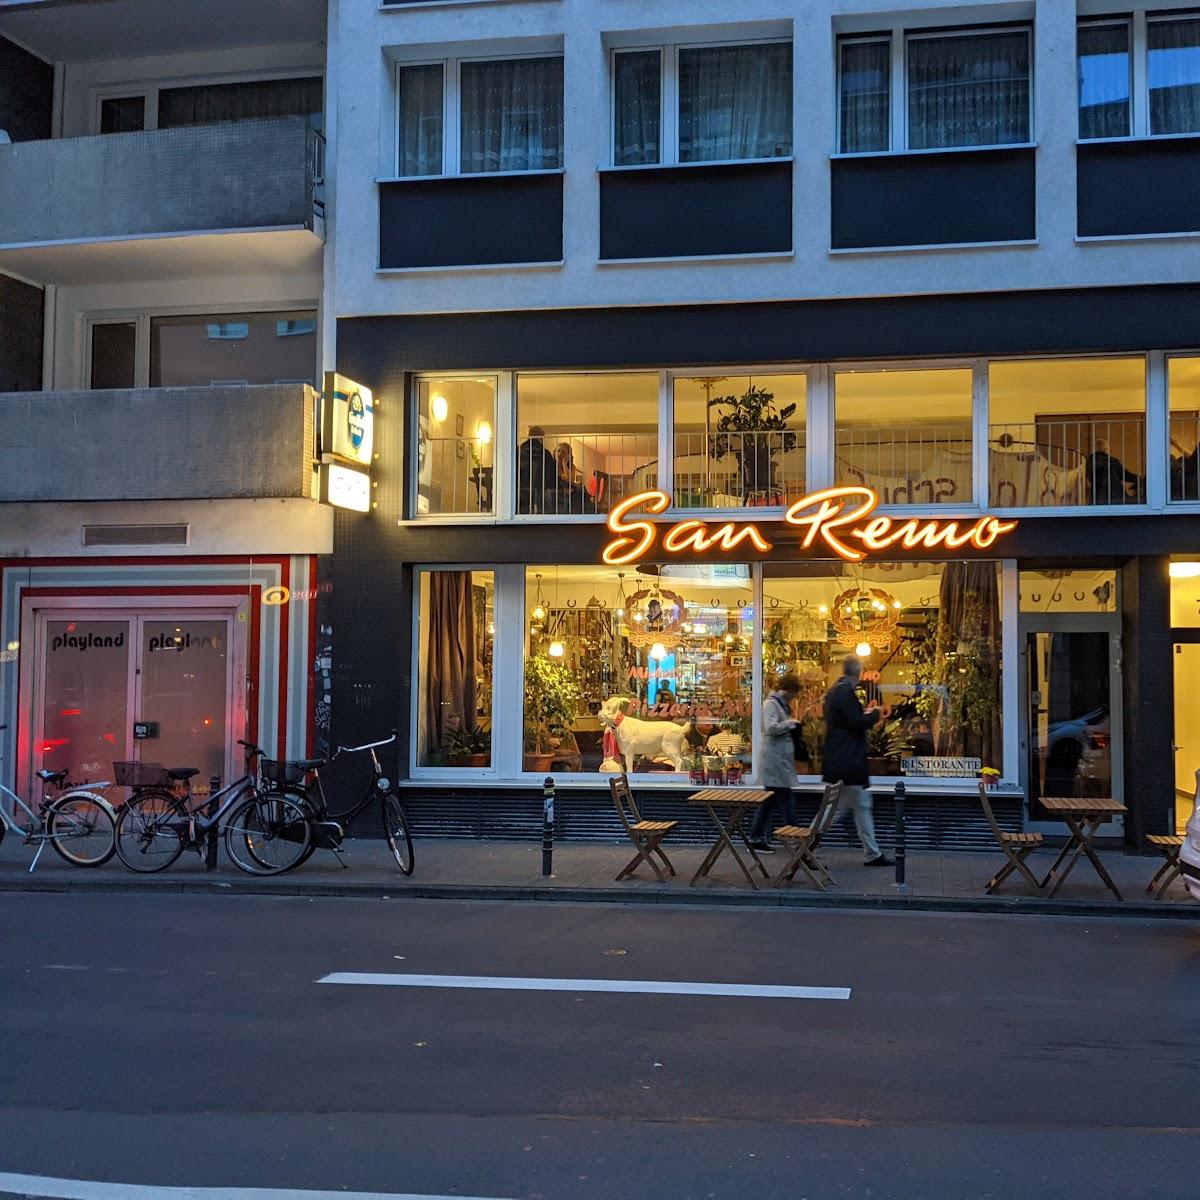 Restaurant "San Remo" in Köln